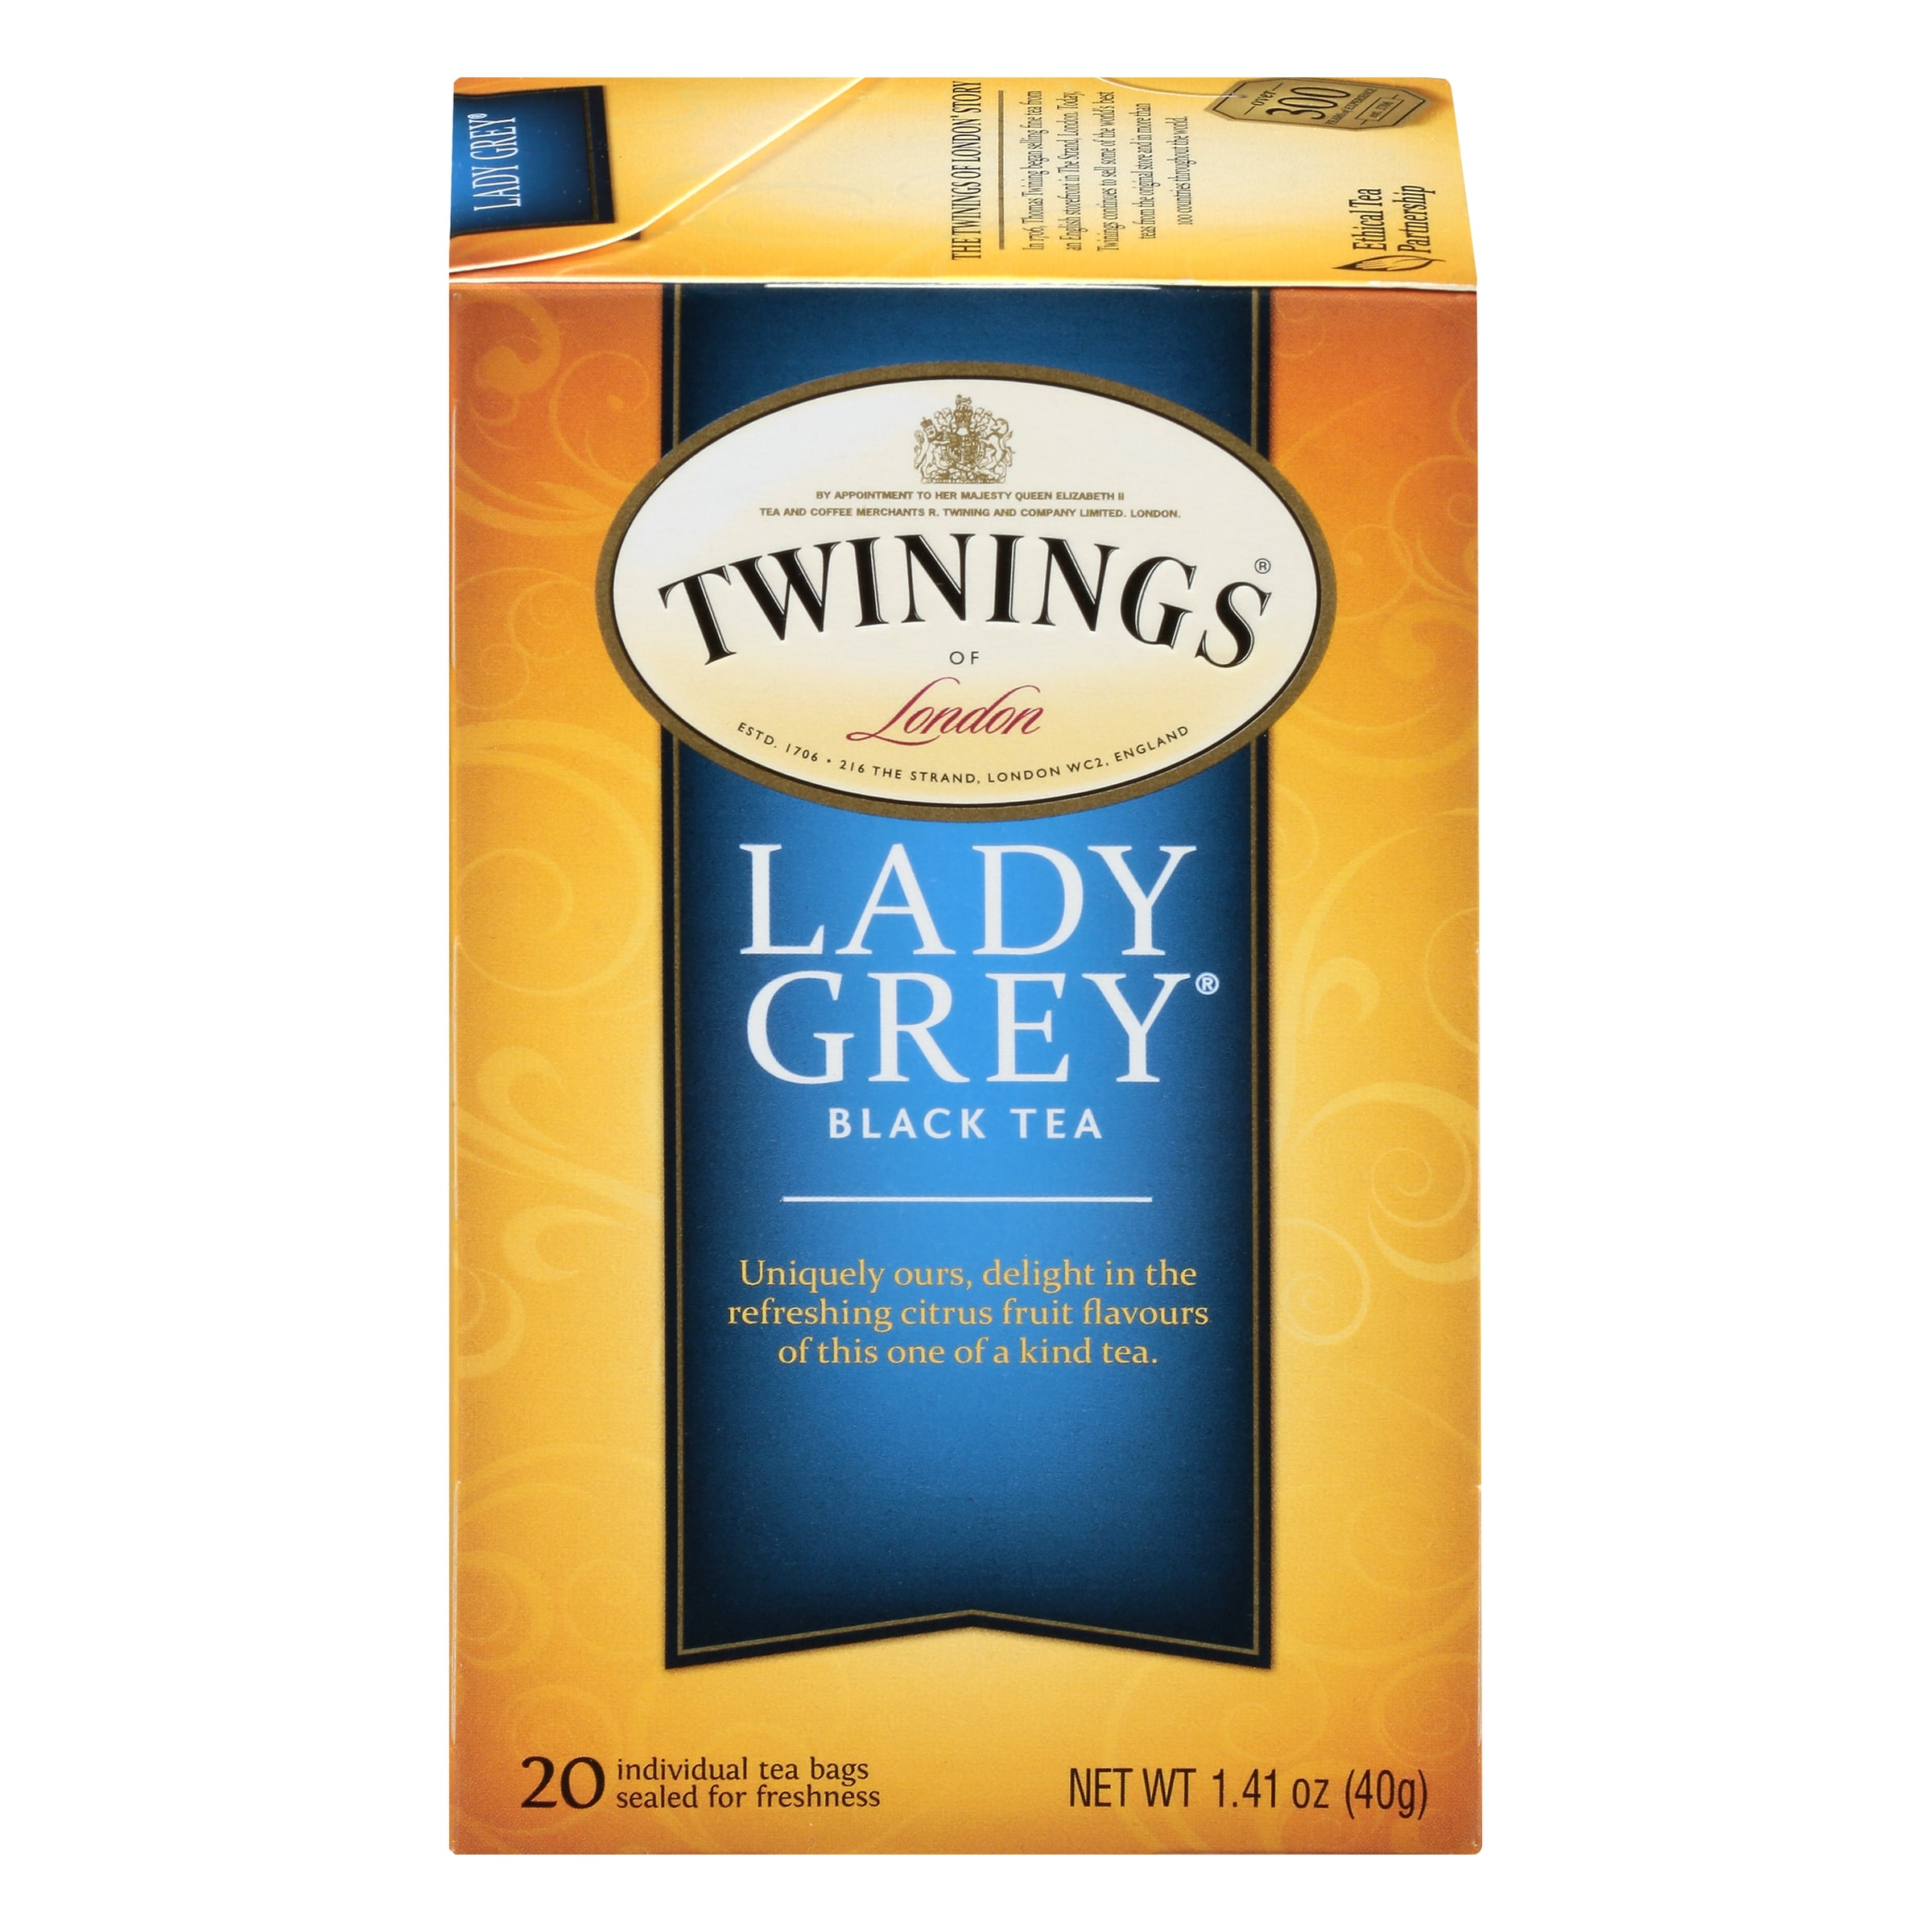 Twinings of London Classics Lady Grey Tea Individually Wrapped Tea Bags, 20 count, 1.41 oz